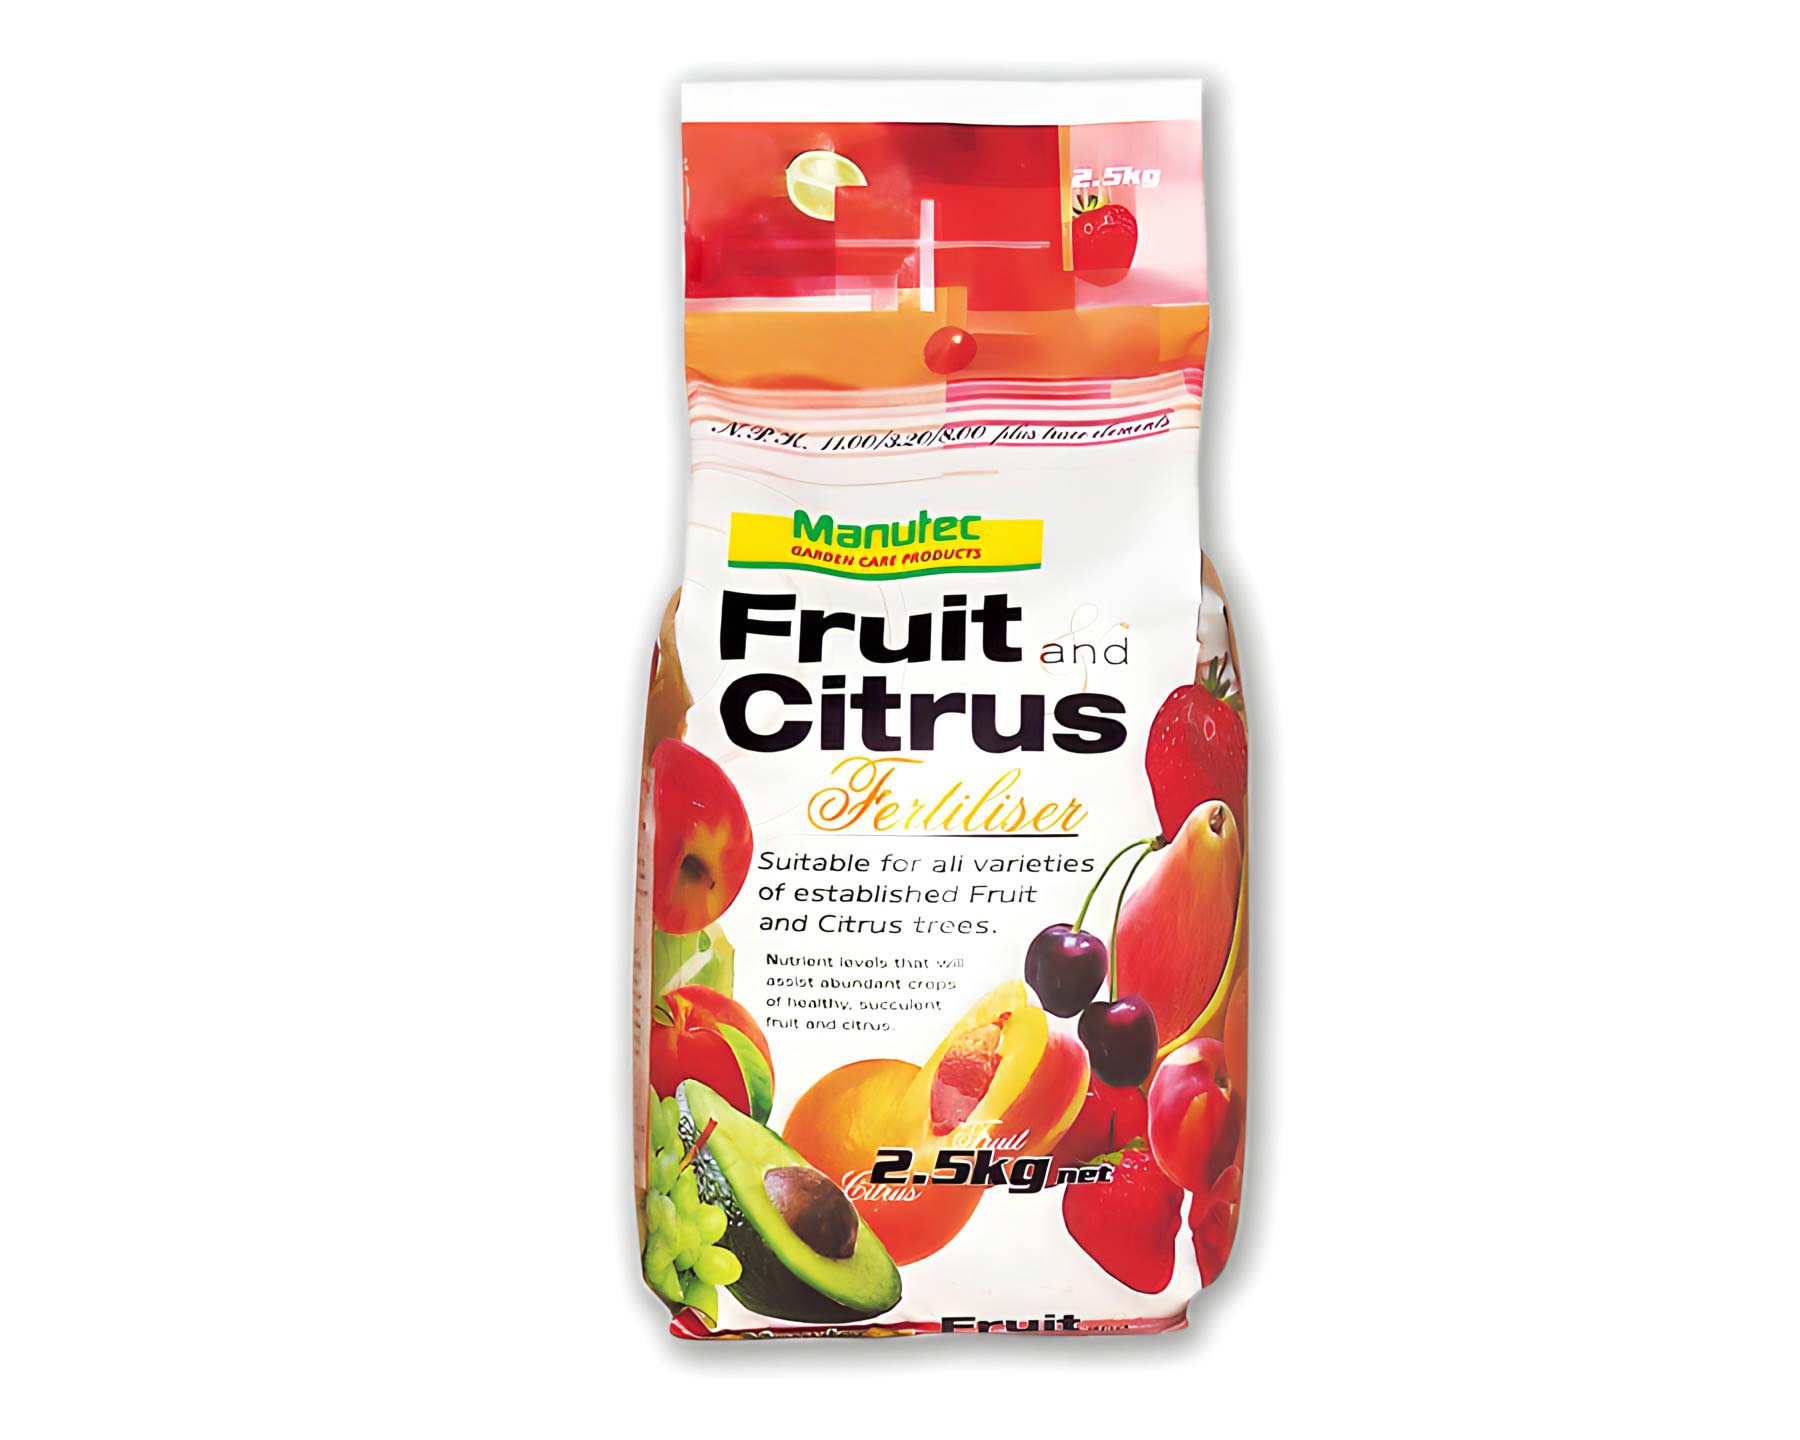 Fruit and Citrus Food - Manutec 2.5kgs bag, granular formulation